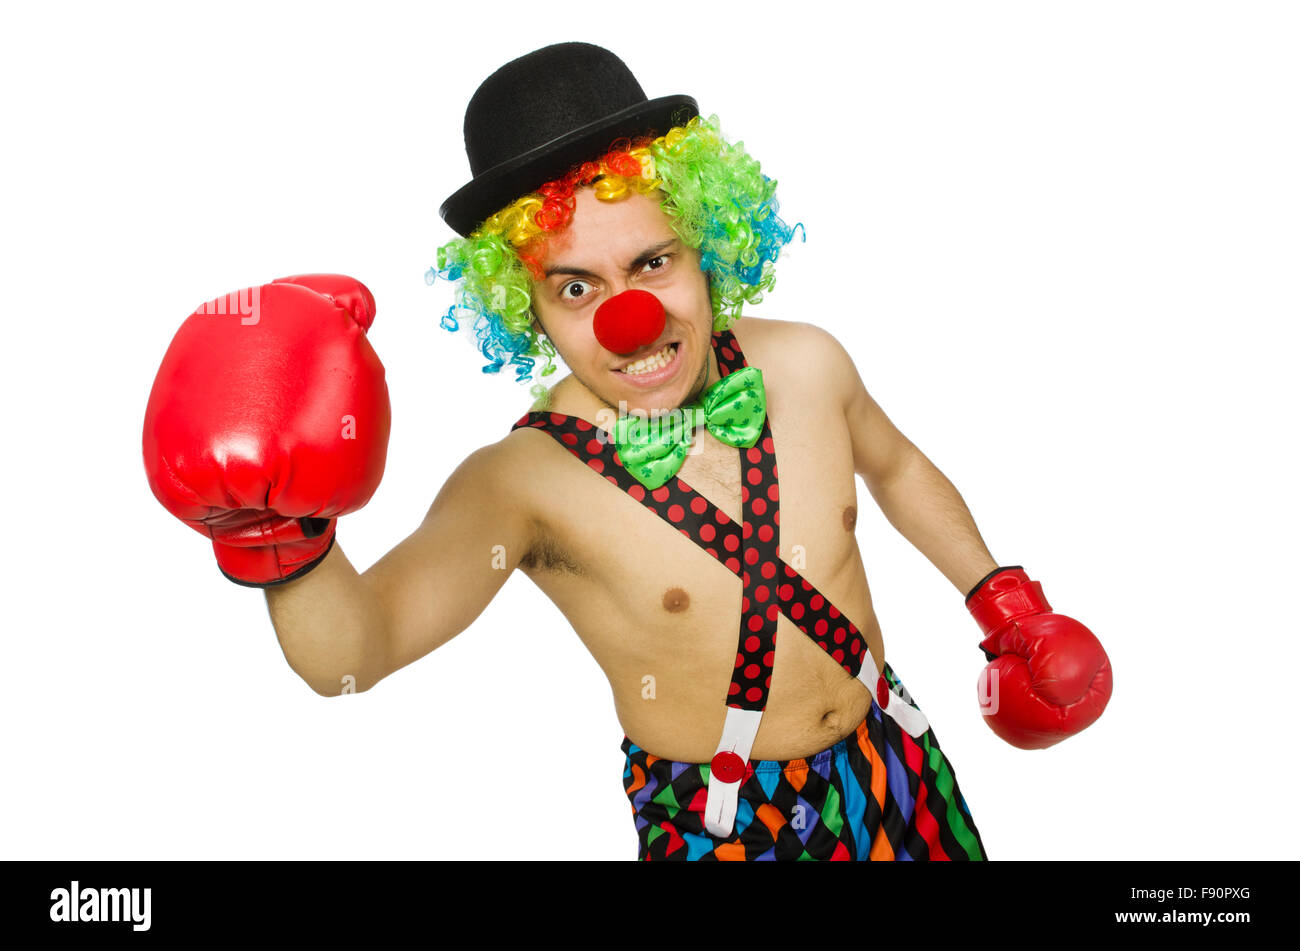 Клоун бокс. Клоун в боксерских перчатках. Бокс с клоуном. А4 боксы с клоуном. Боевые клоуны бокс.